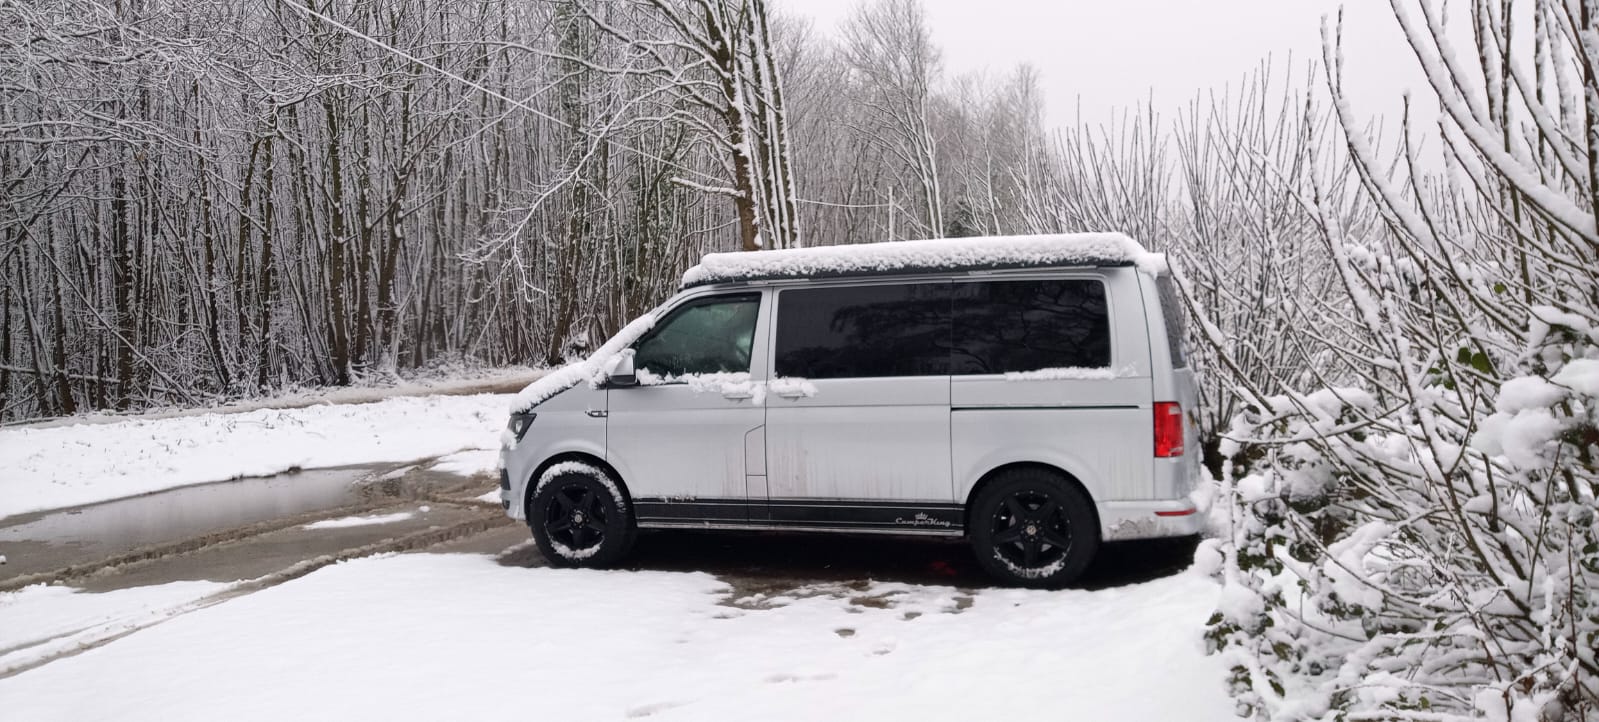 VW Campervan, warm in winter